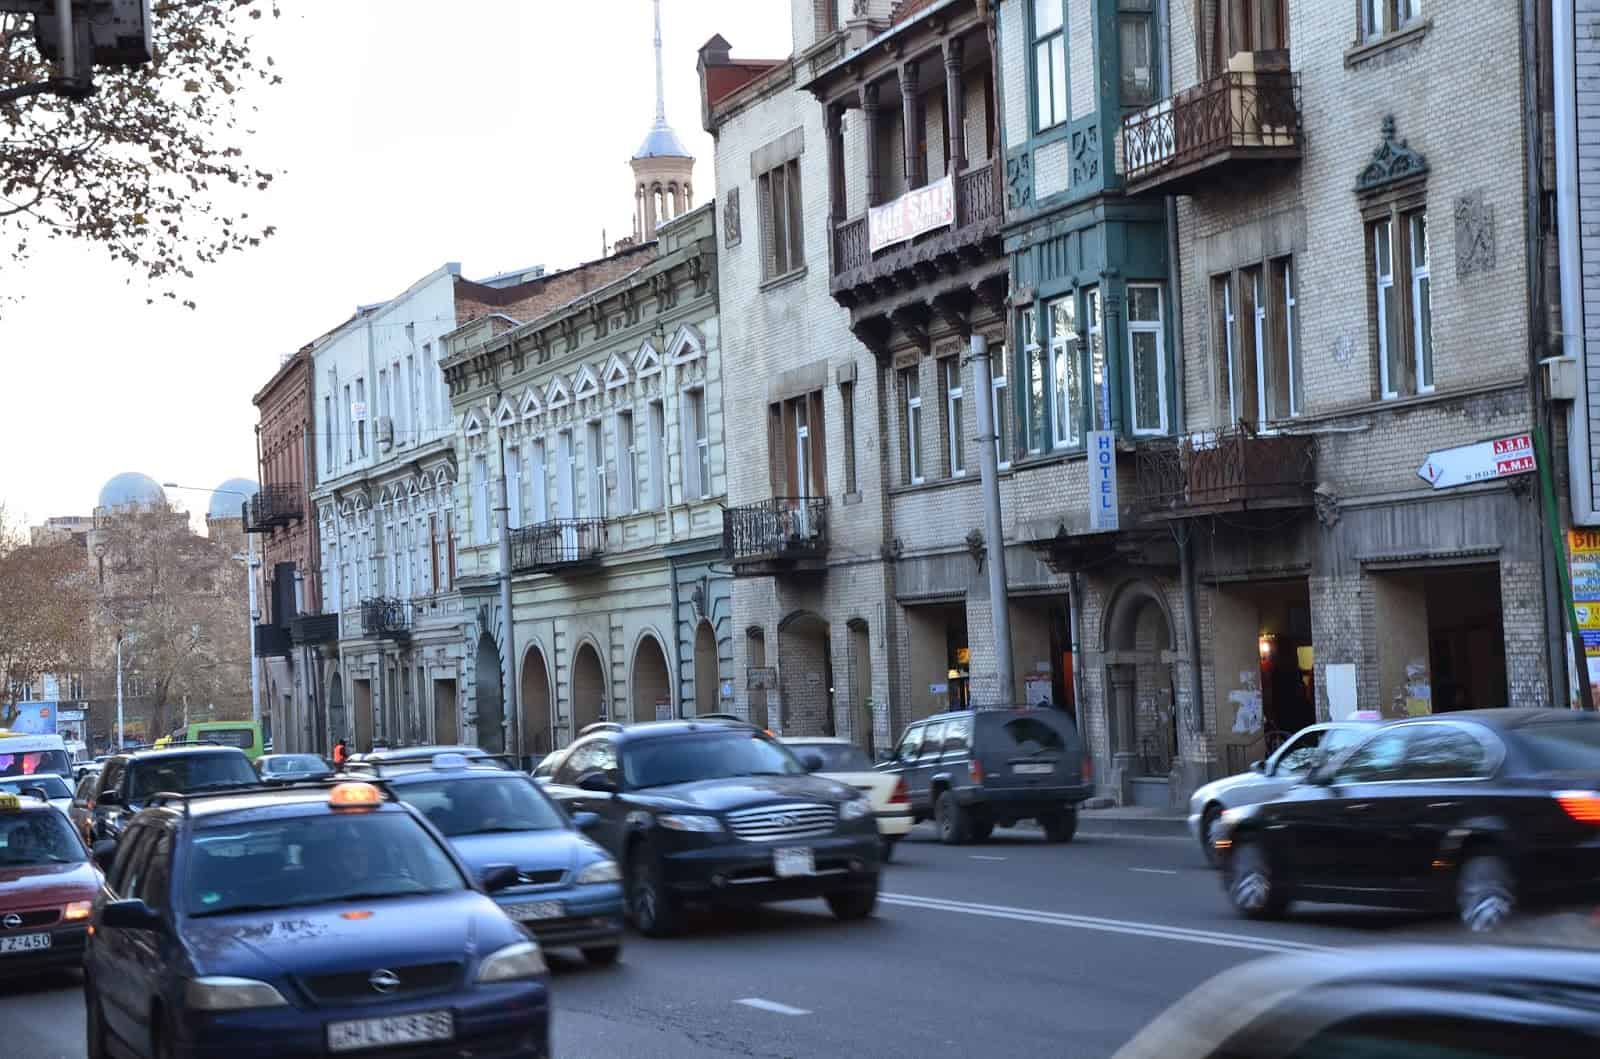 Kostava Street in Tbilisi, Georgia